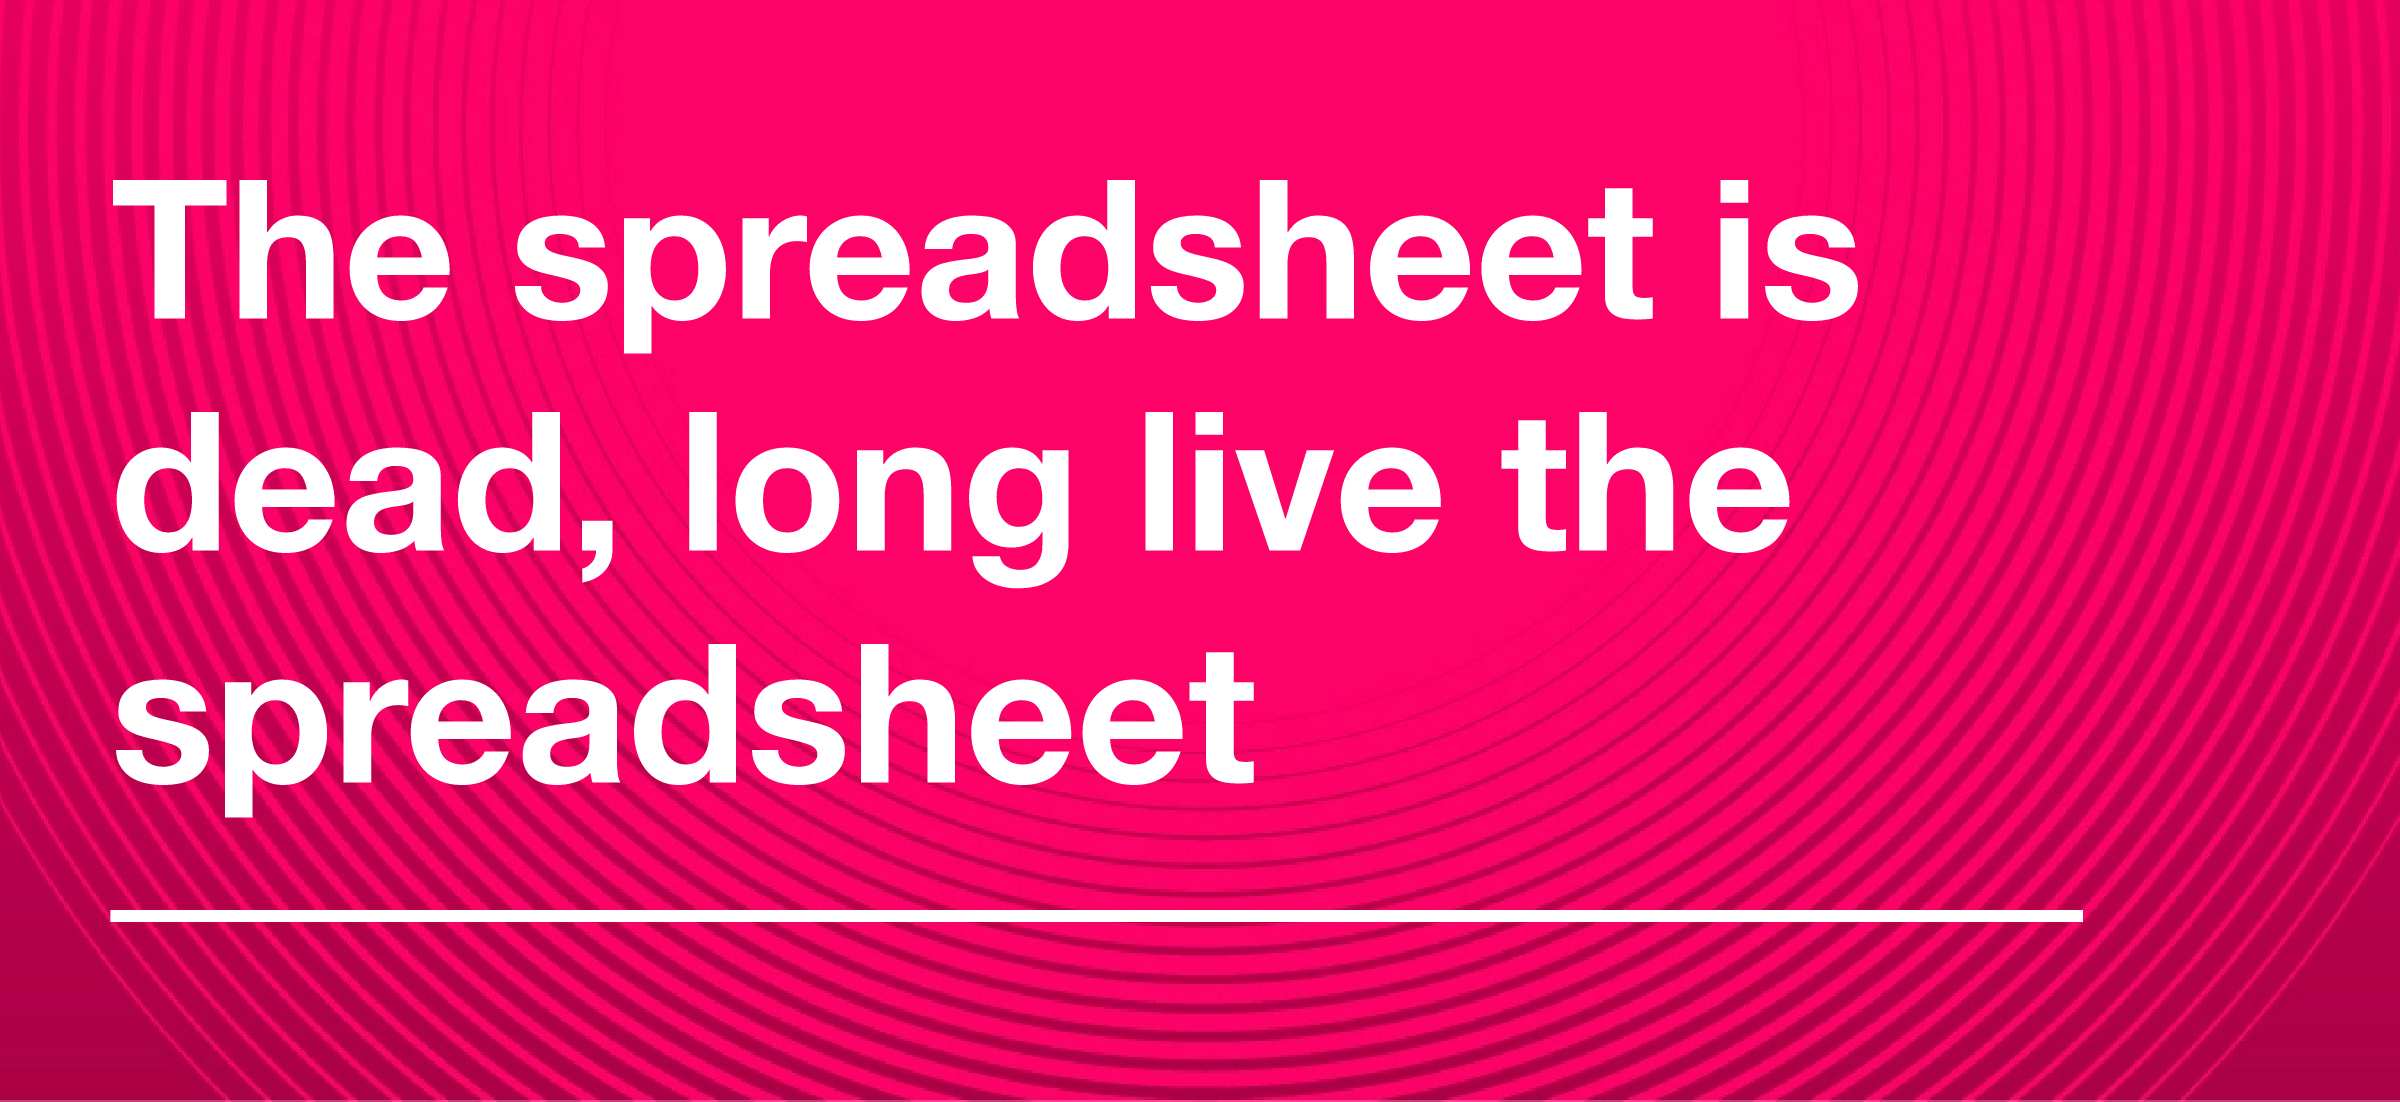 The spreadsheet is dead. Long live the spreadsheet.